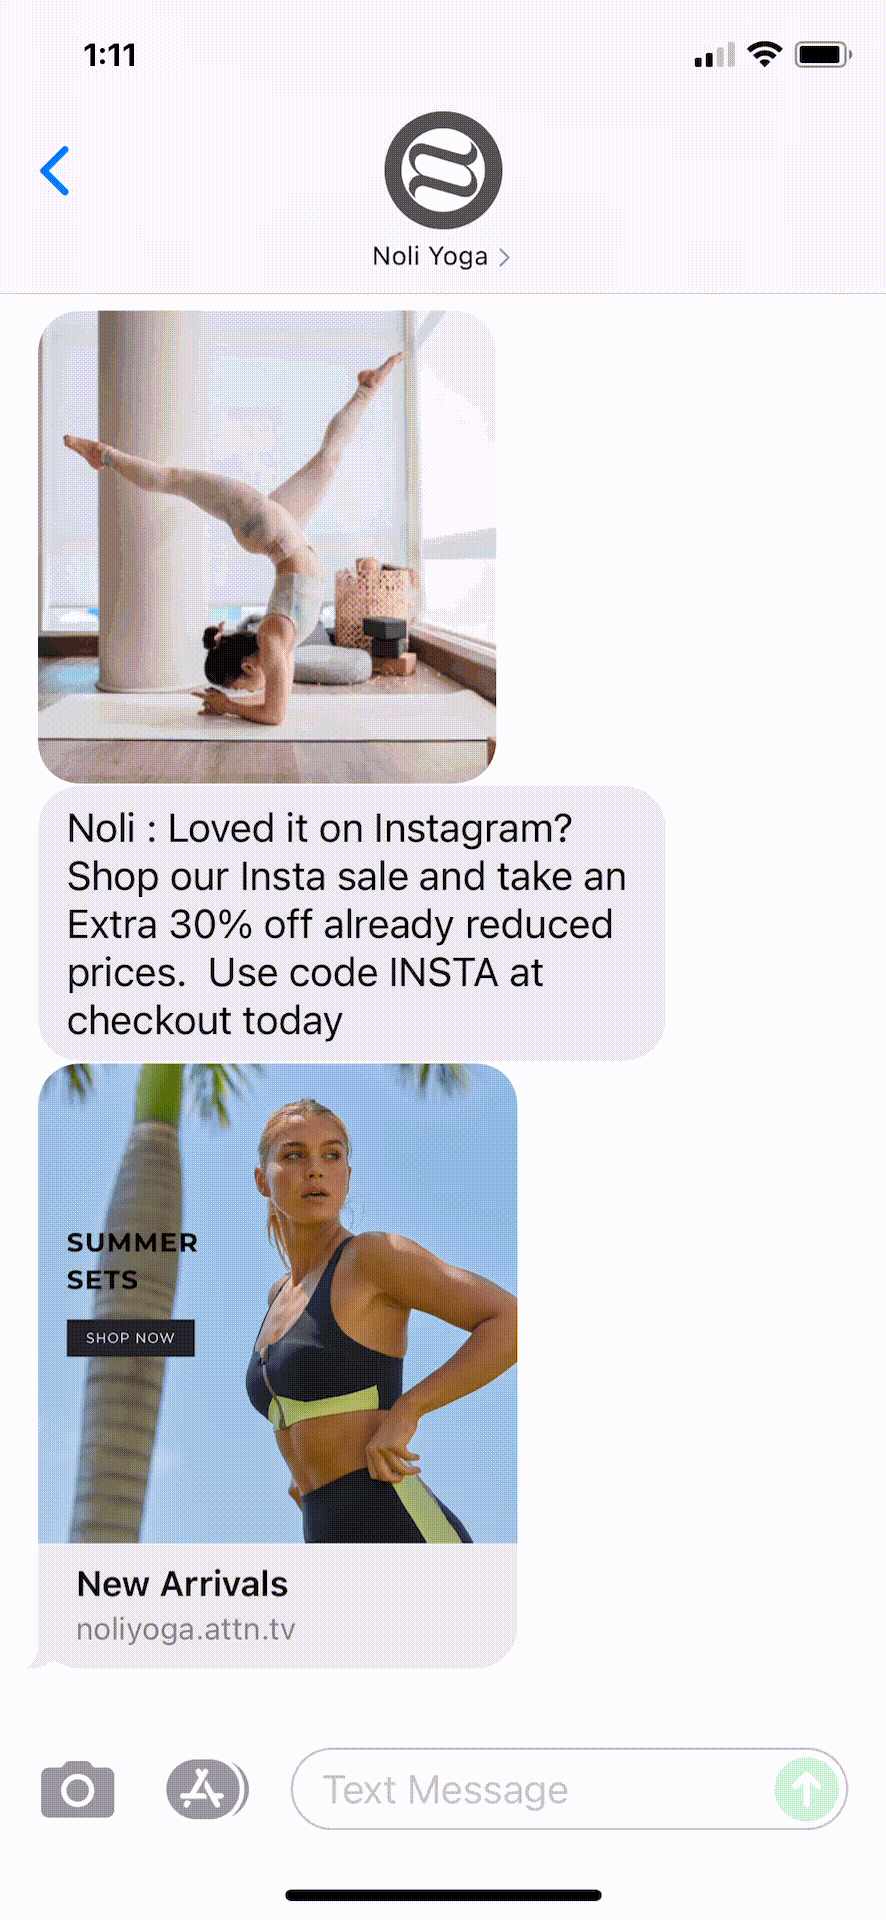 Noli-Yoga-Text-Message-Marketing-Example-07.19.2021